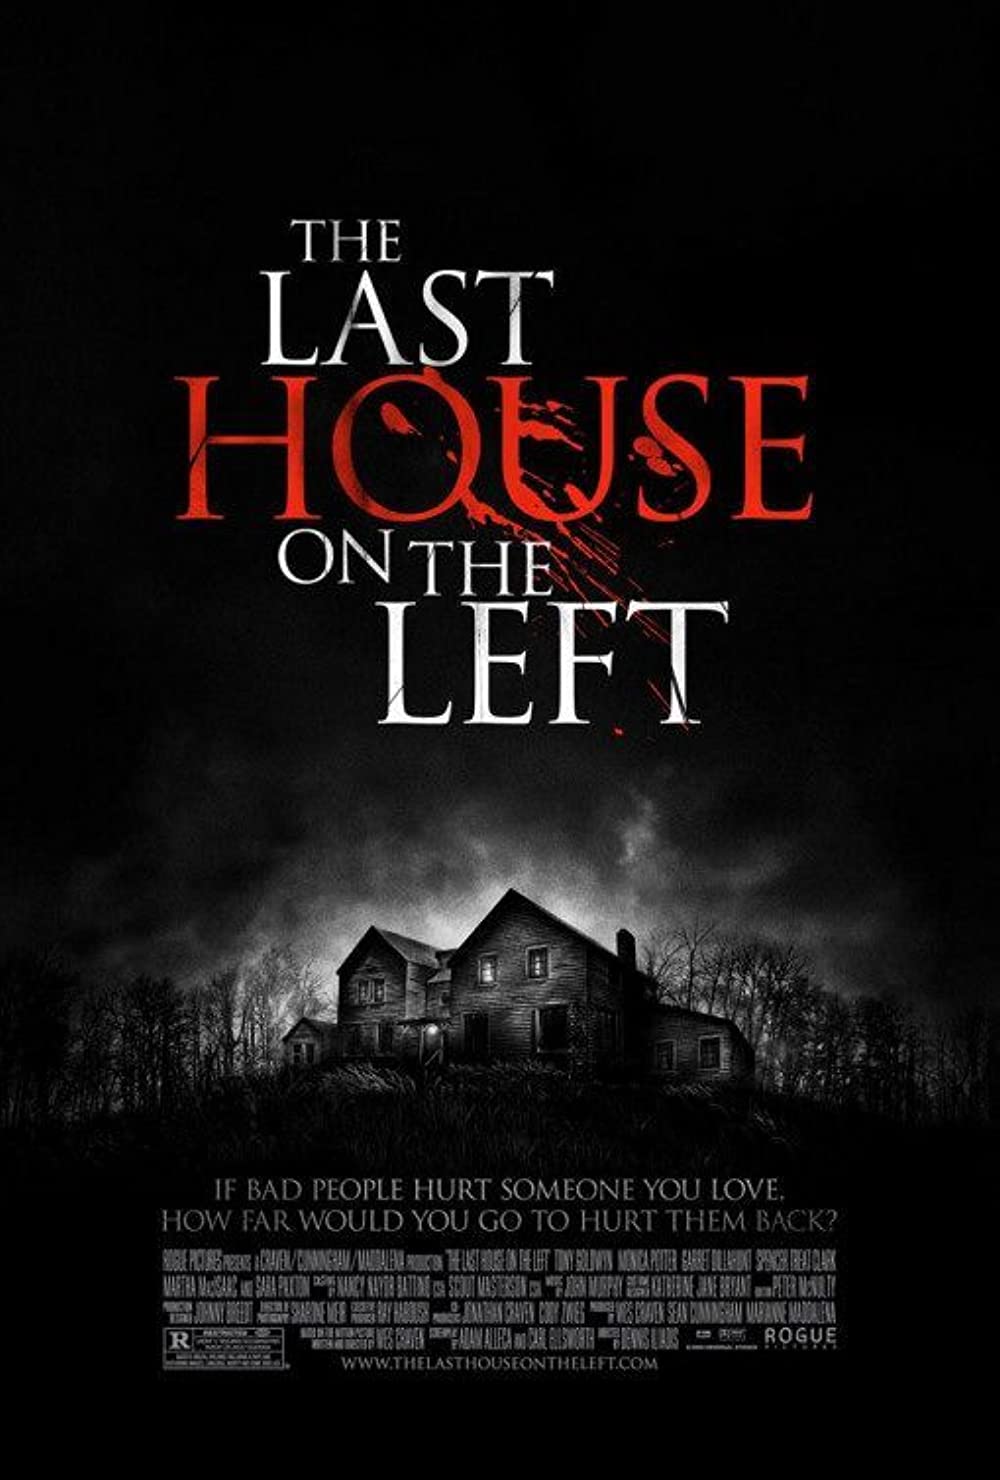 Filmbeschreibung zu The Last House on the Left